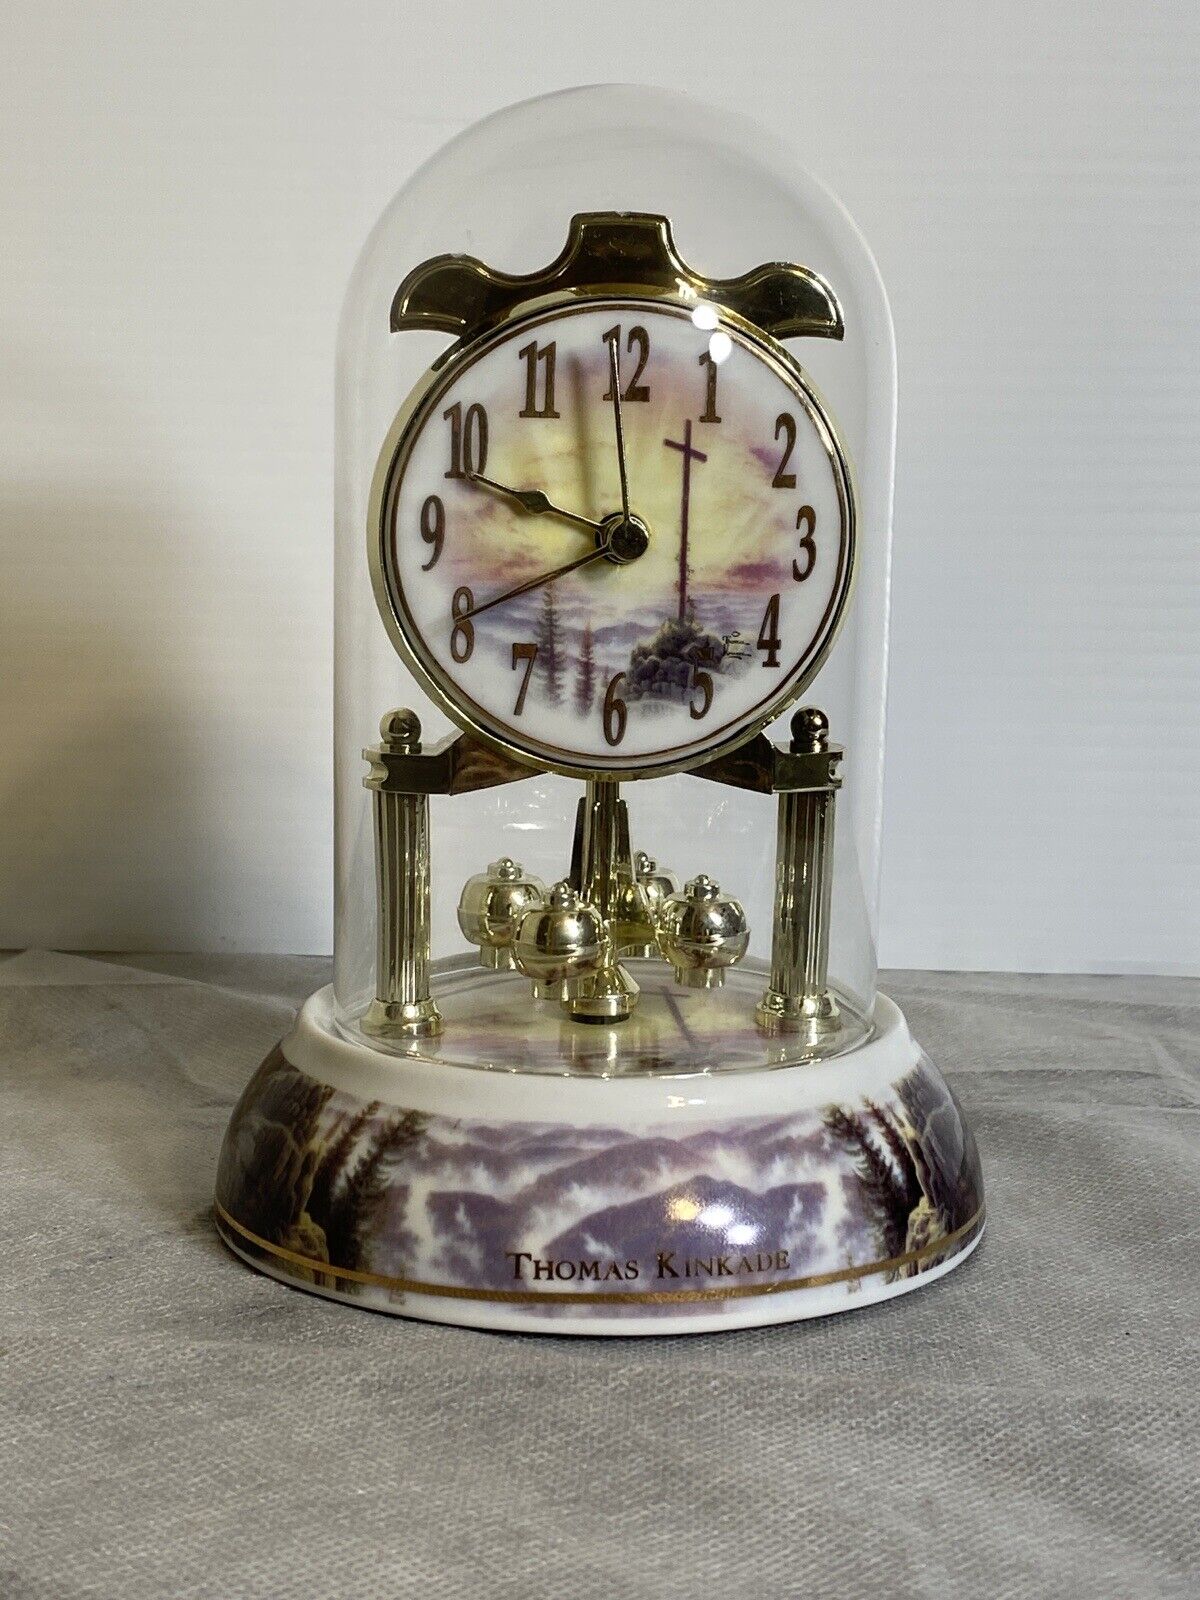 Thomas Kinkade Chime Clock w/Glass Dome | Sunrise | 2003 With Spinning Pendulum